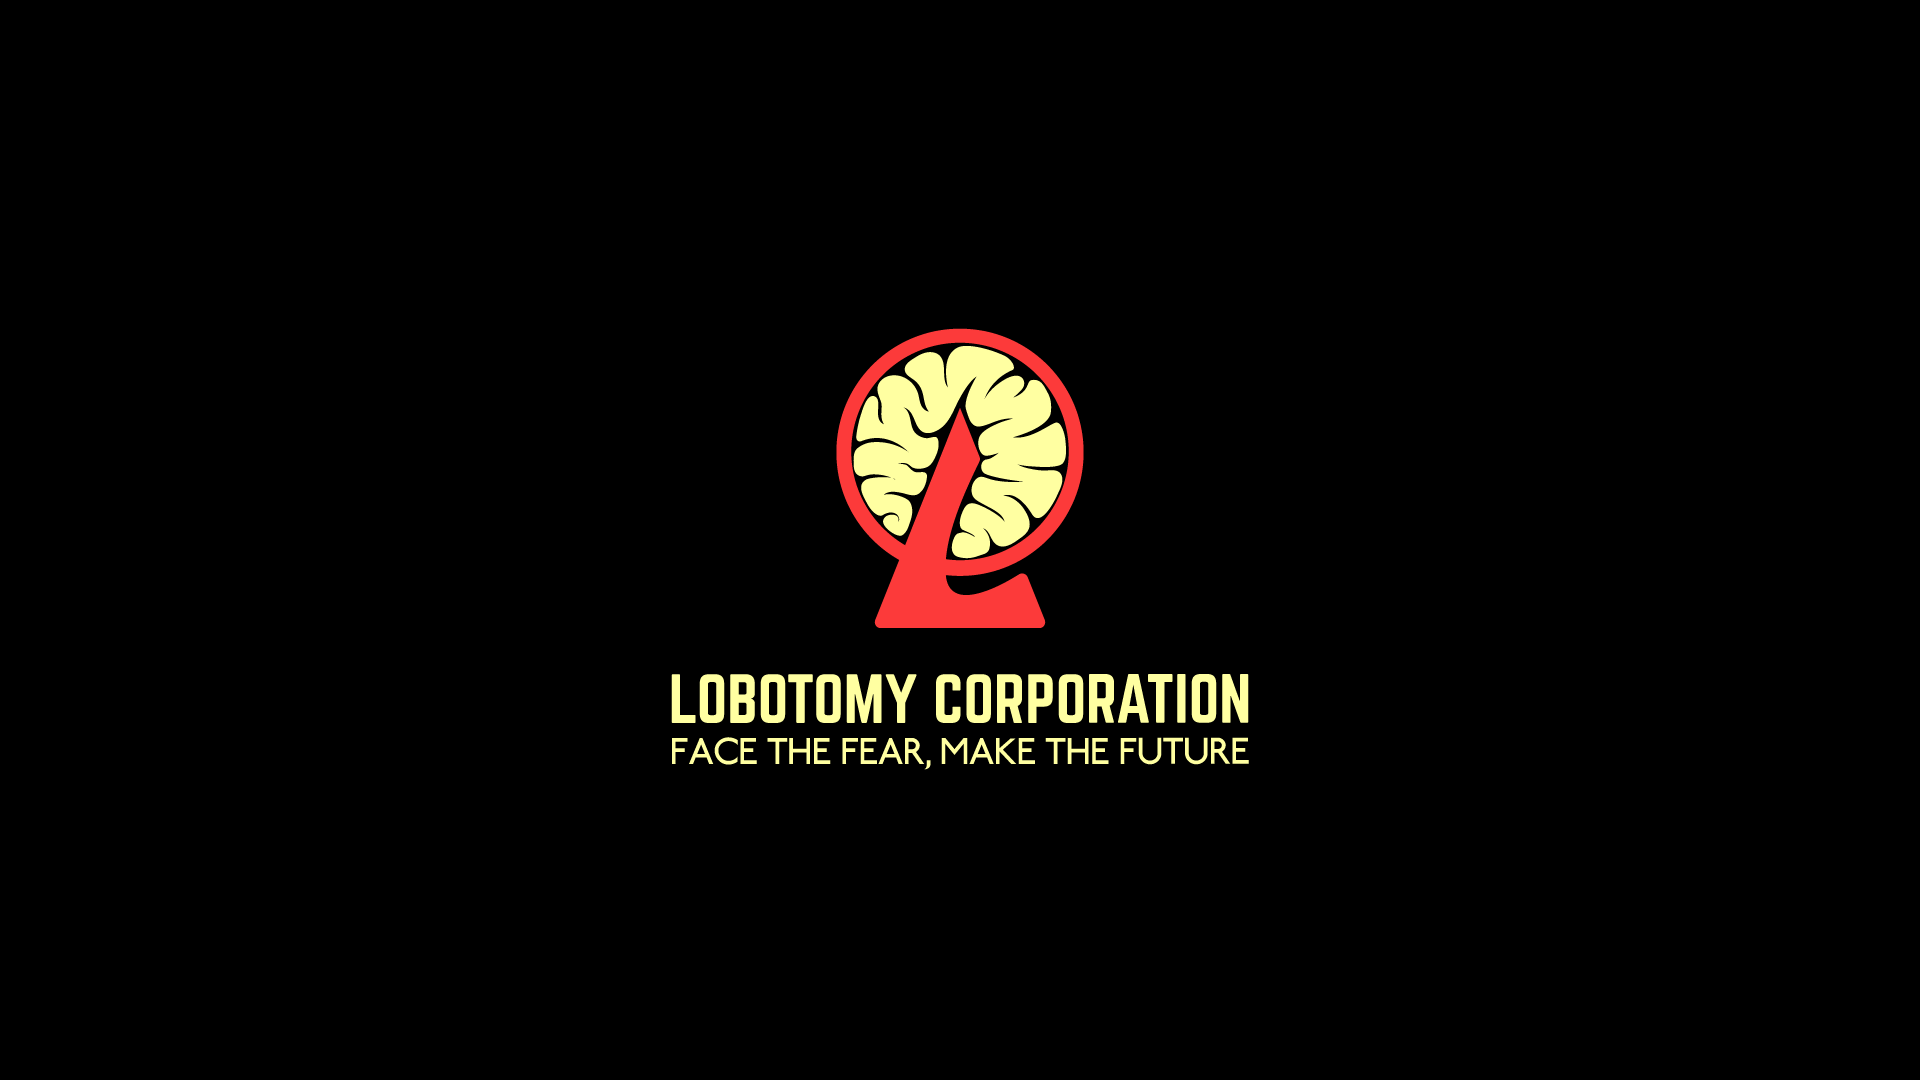 steam lobotomy corporation download free